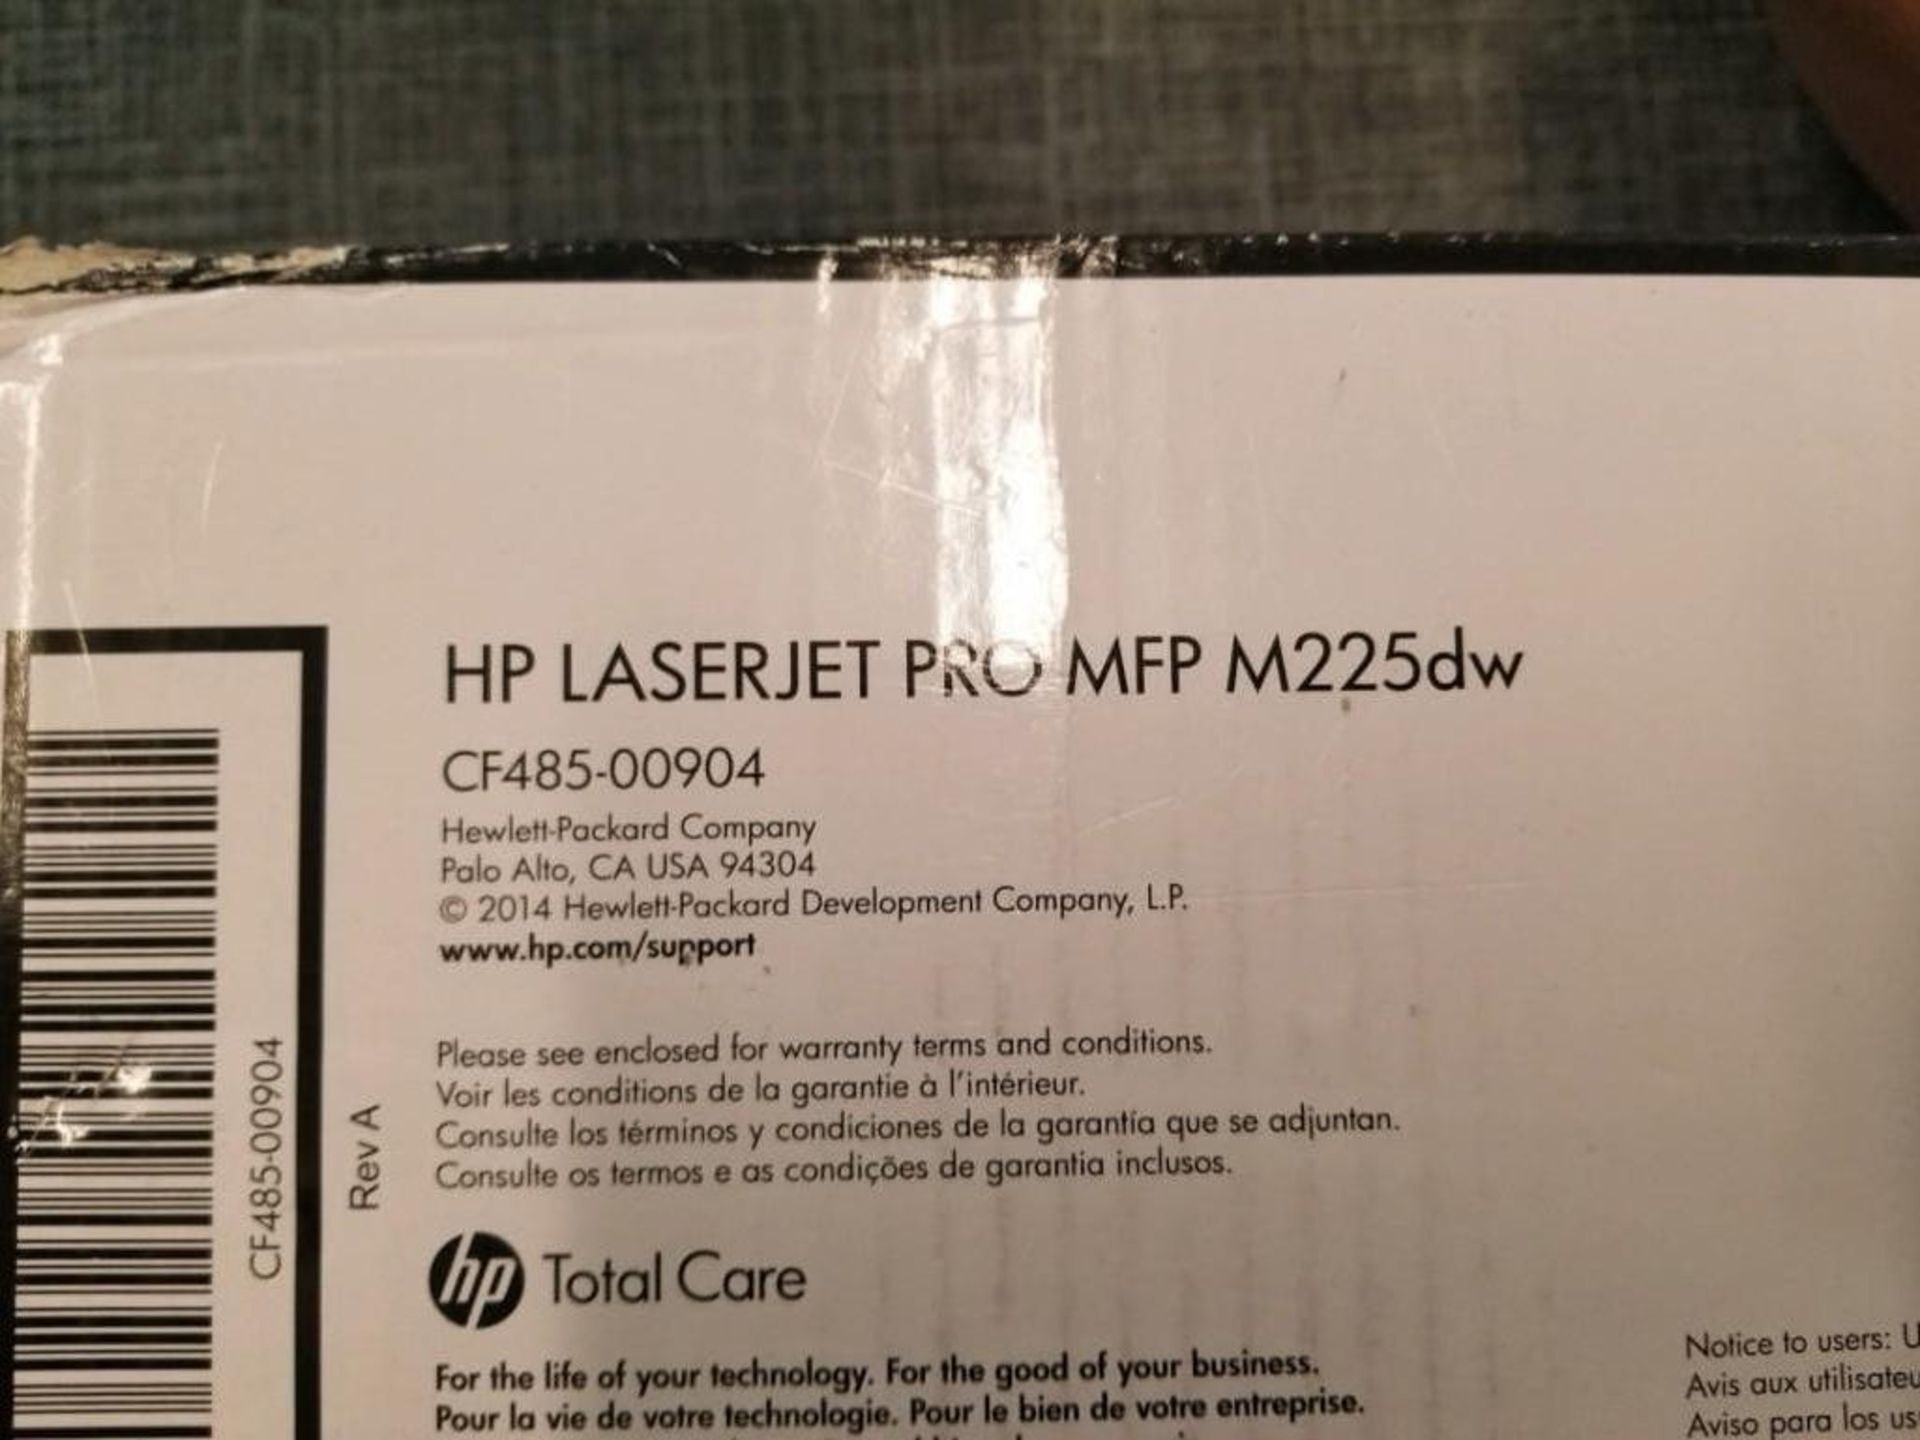 HP LaserJet Pro MFP M225dw - Image 2 of 2